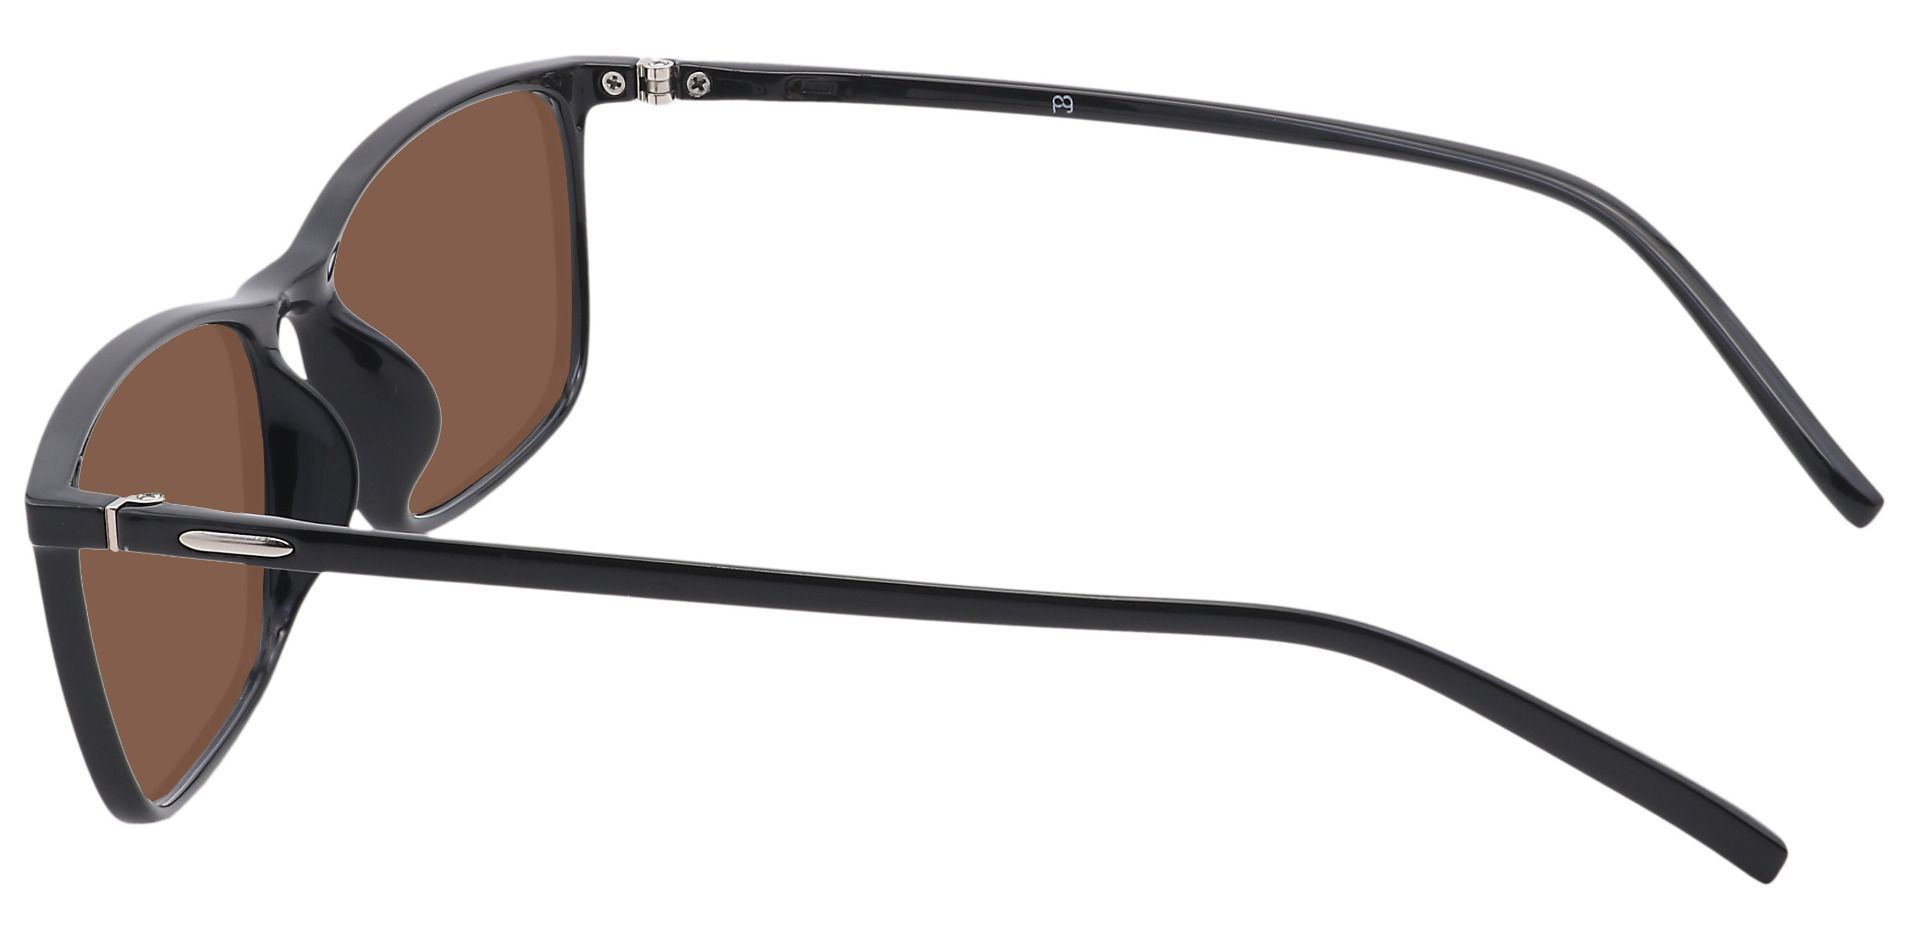 Fuji Rectangle Progressive Sunglasses - Black Frame With Brown Lenses